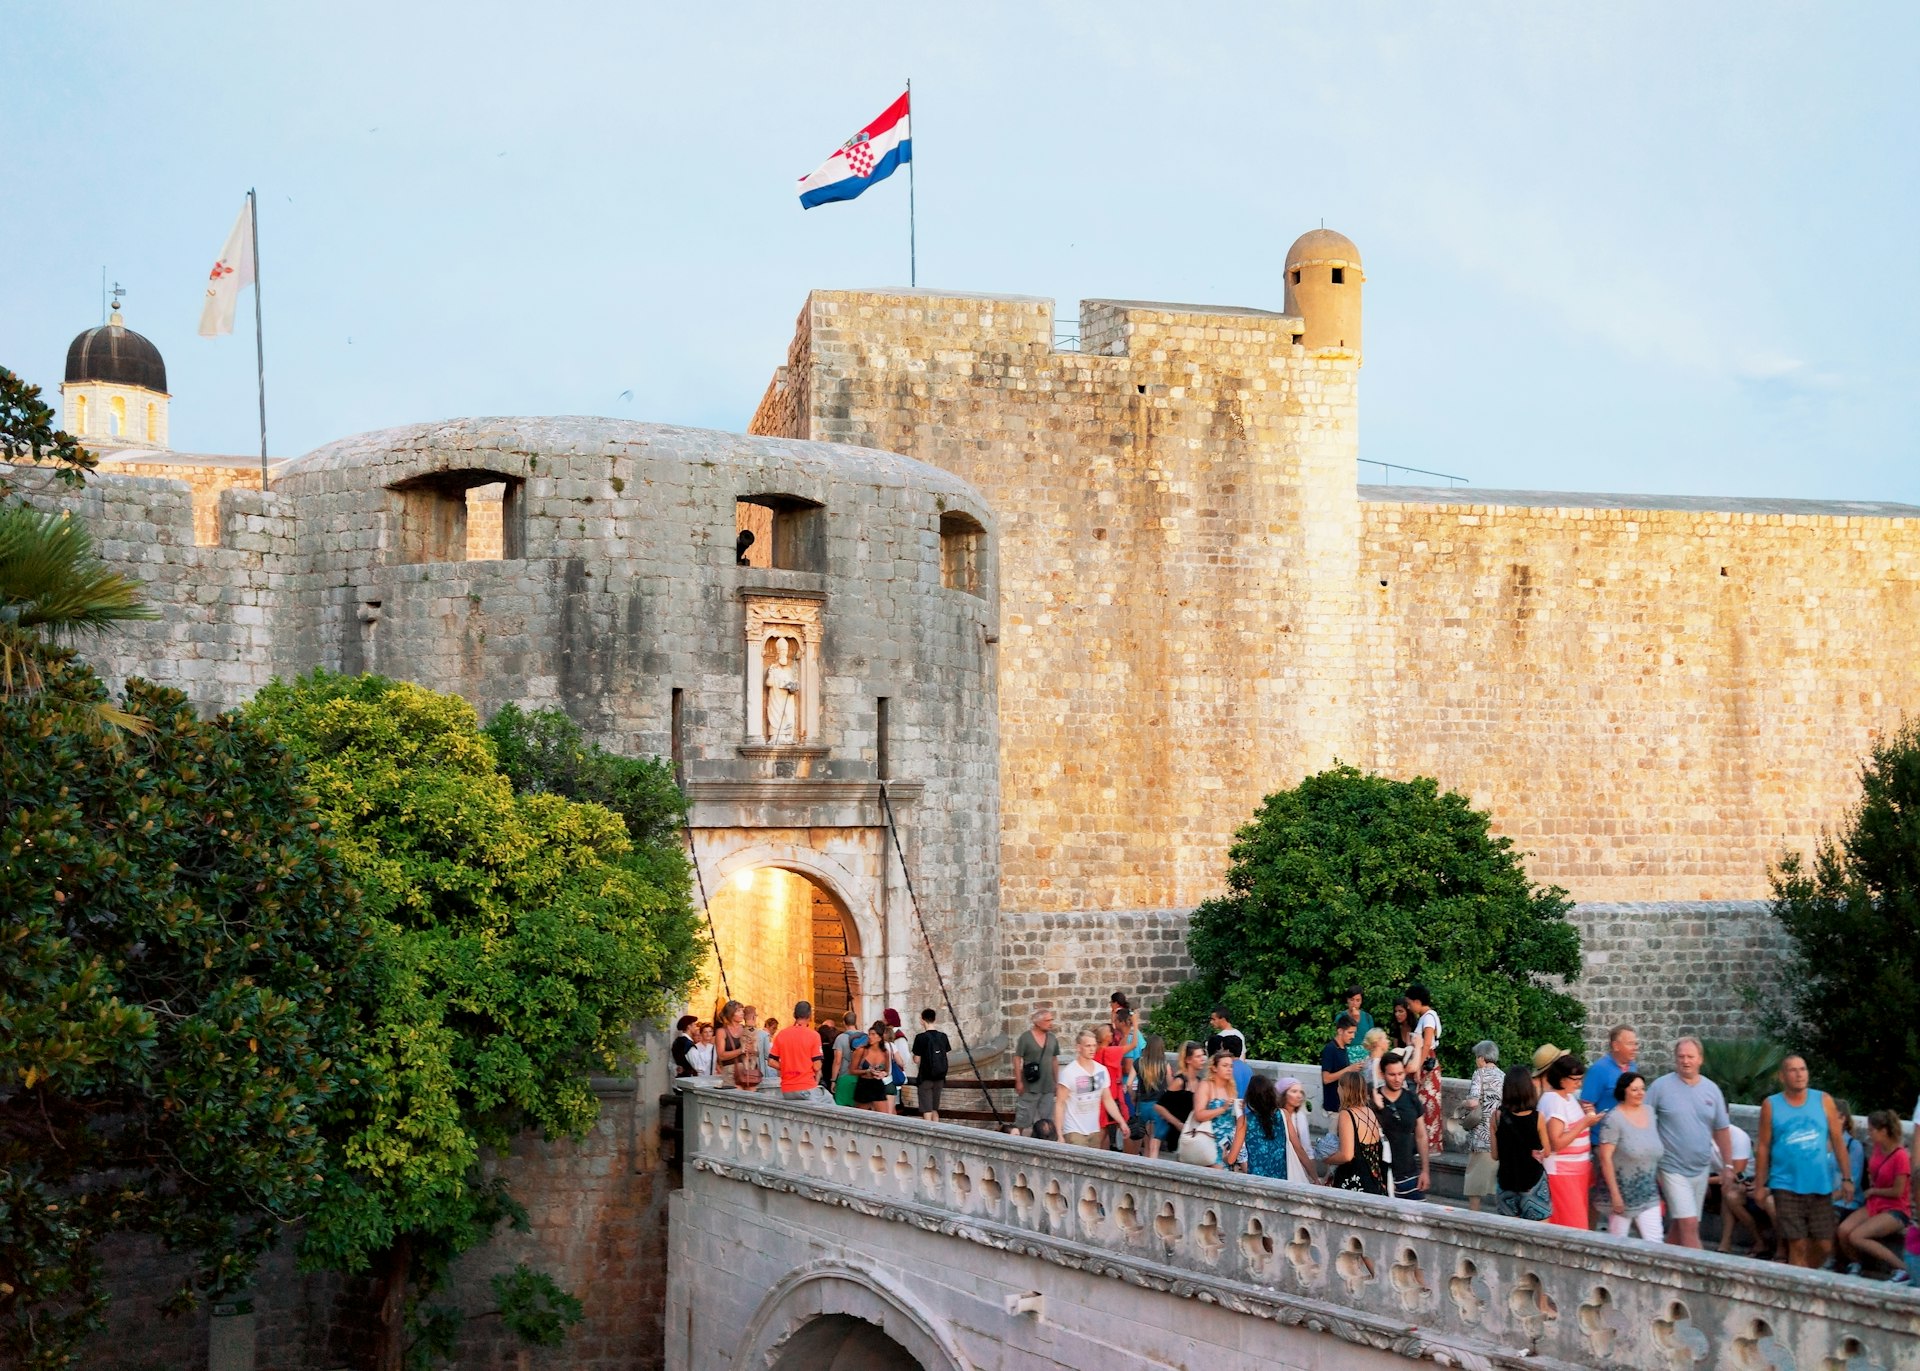 Tourists cross a bridge towards a vast stone gateway in city walls